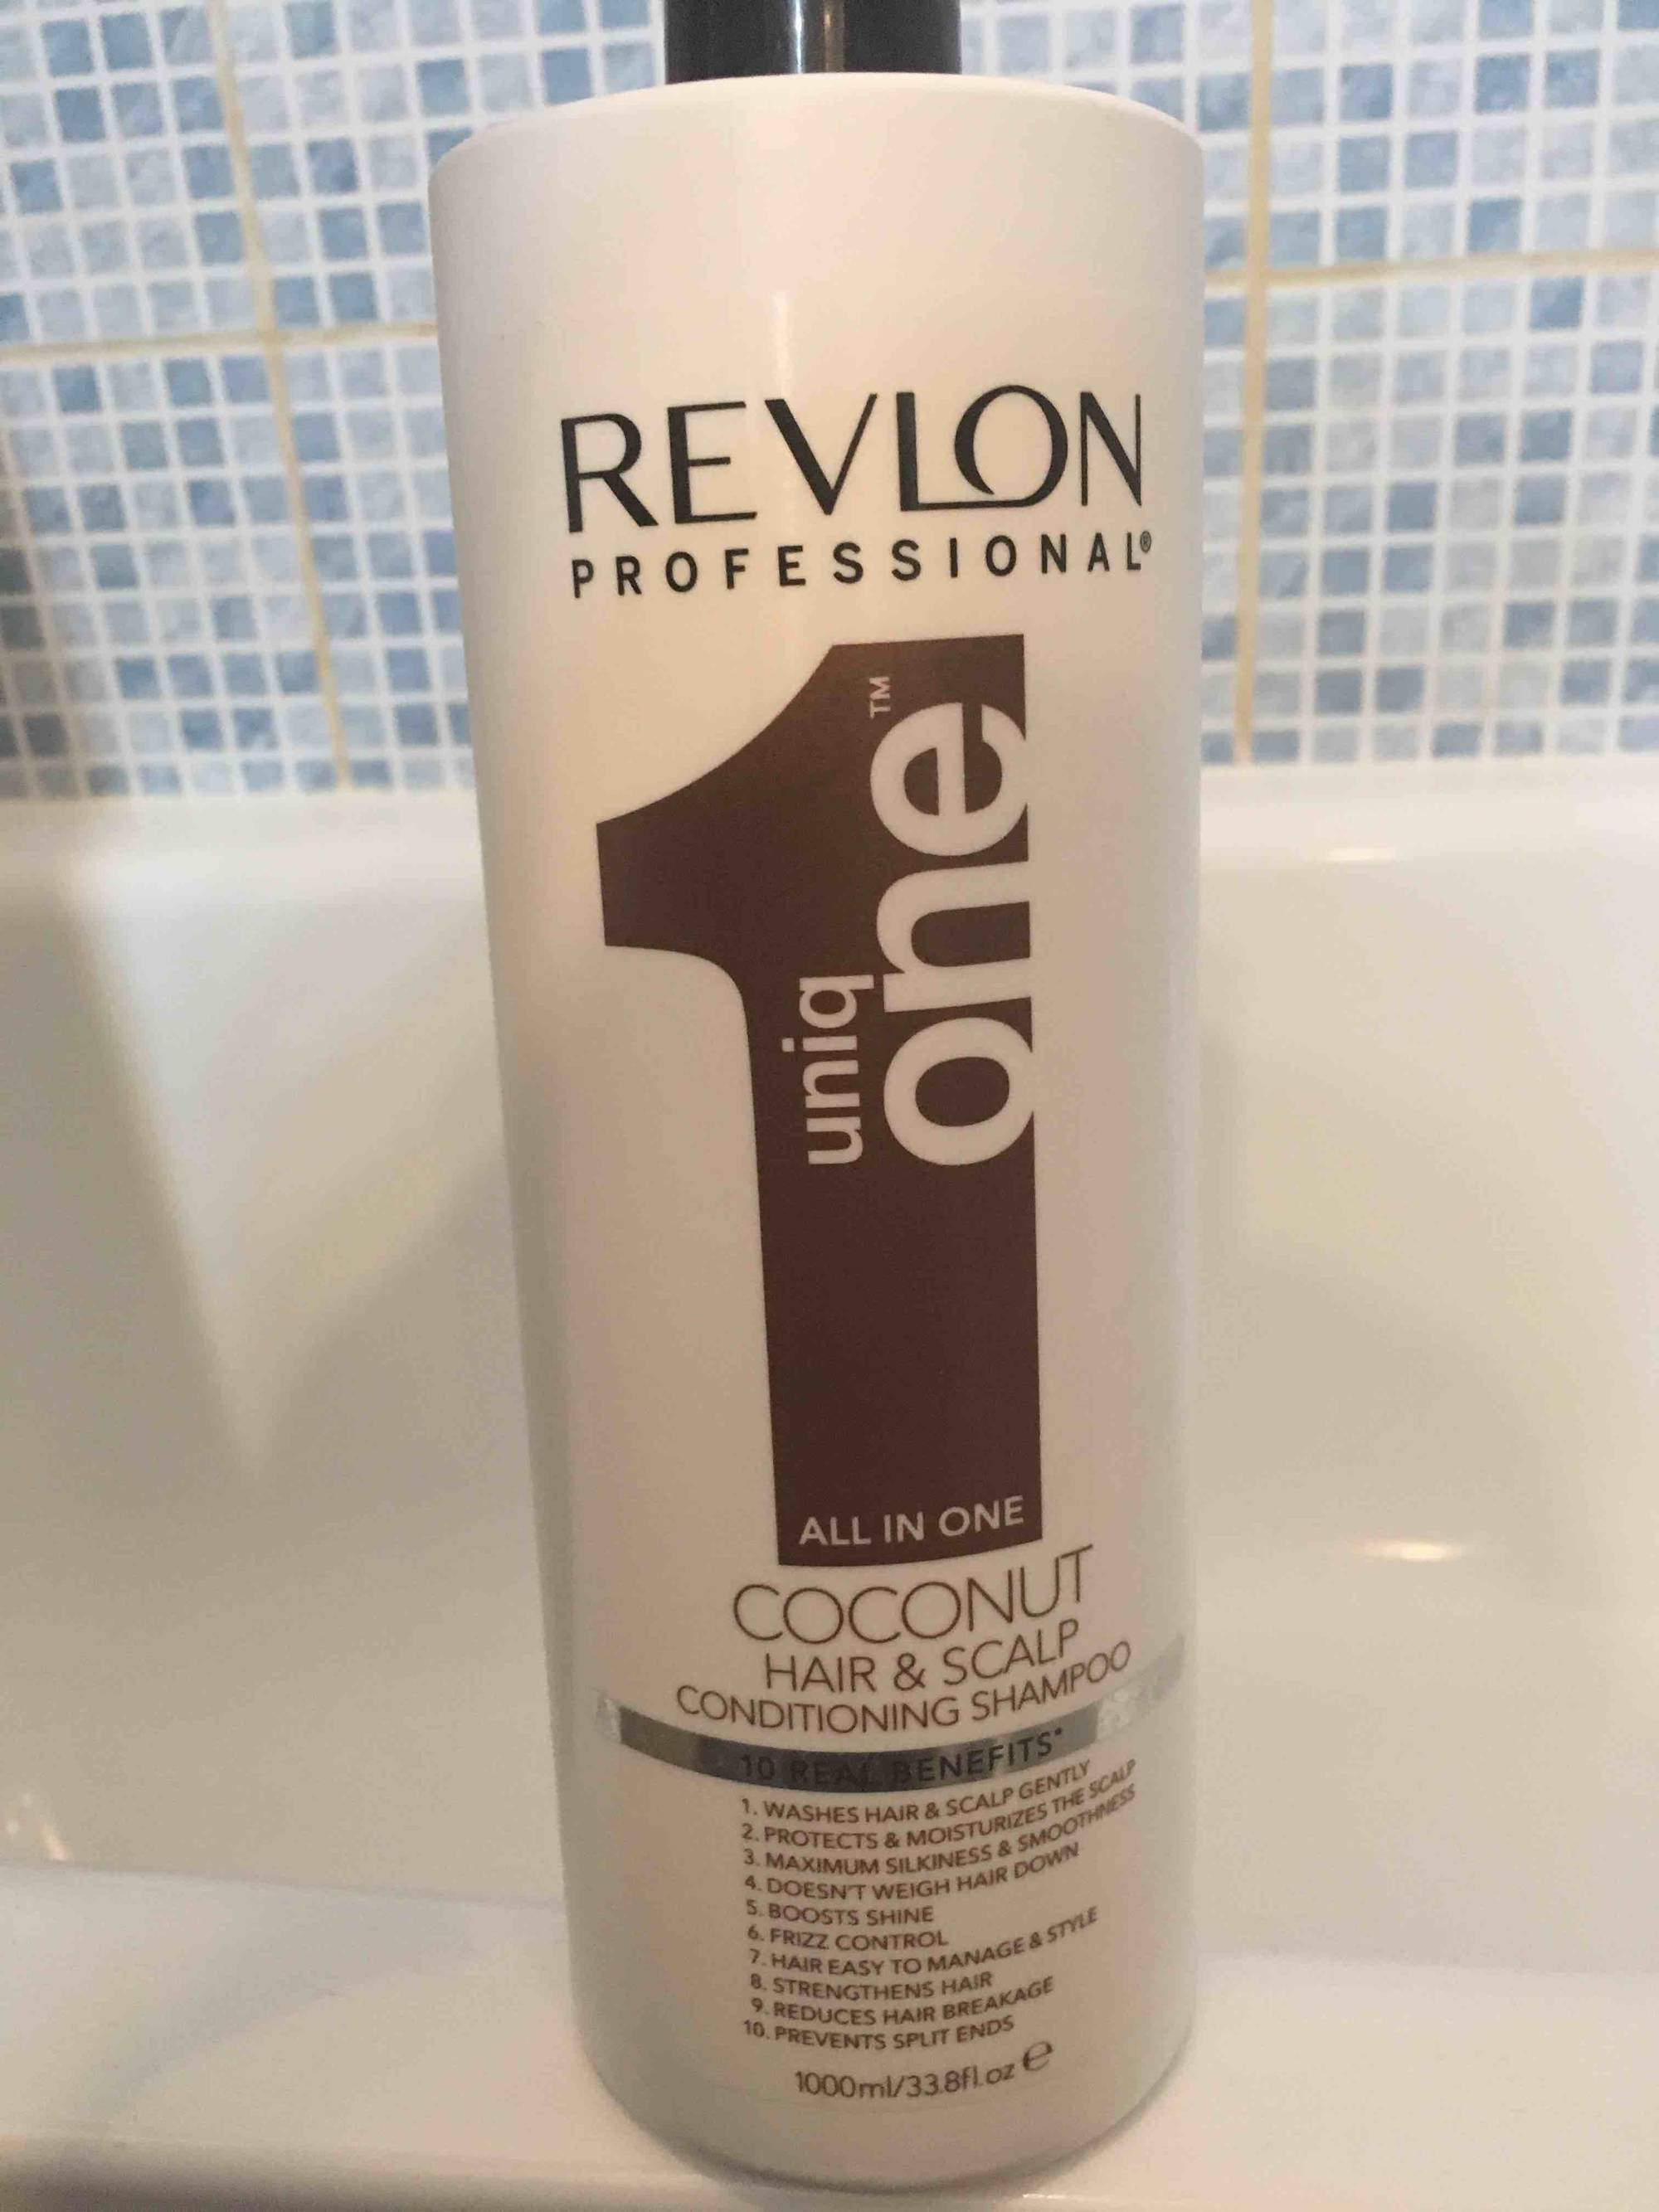 REVLON PROFESSIONNAL - Uniq one - Coconut hair & scalp - Conditioning shampoo 